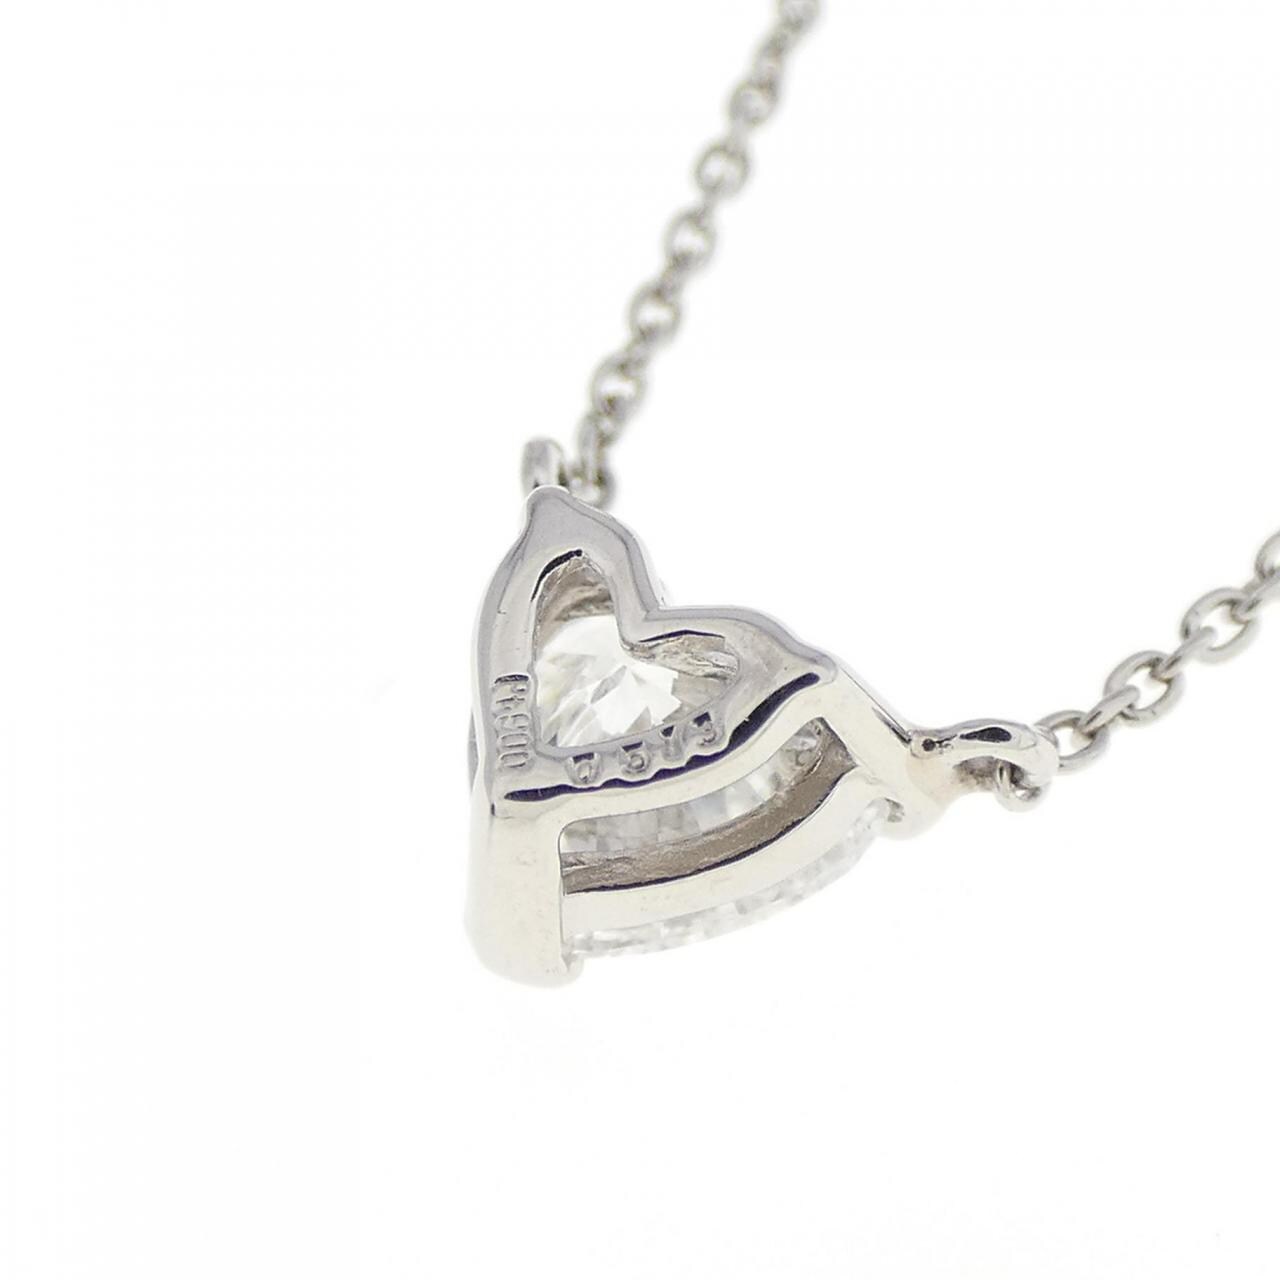 [Remake] PT Diamond Necklace 0.513CT F SI2 Heart Shape